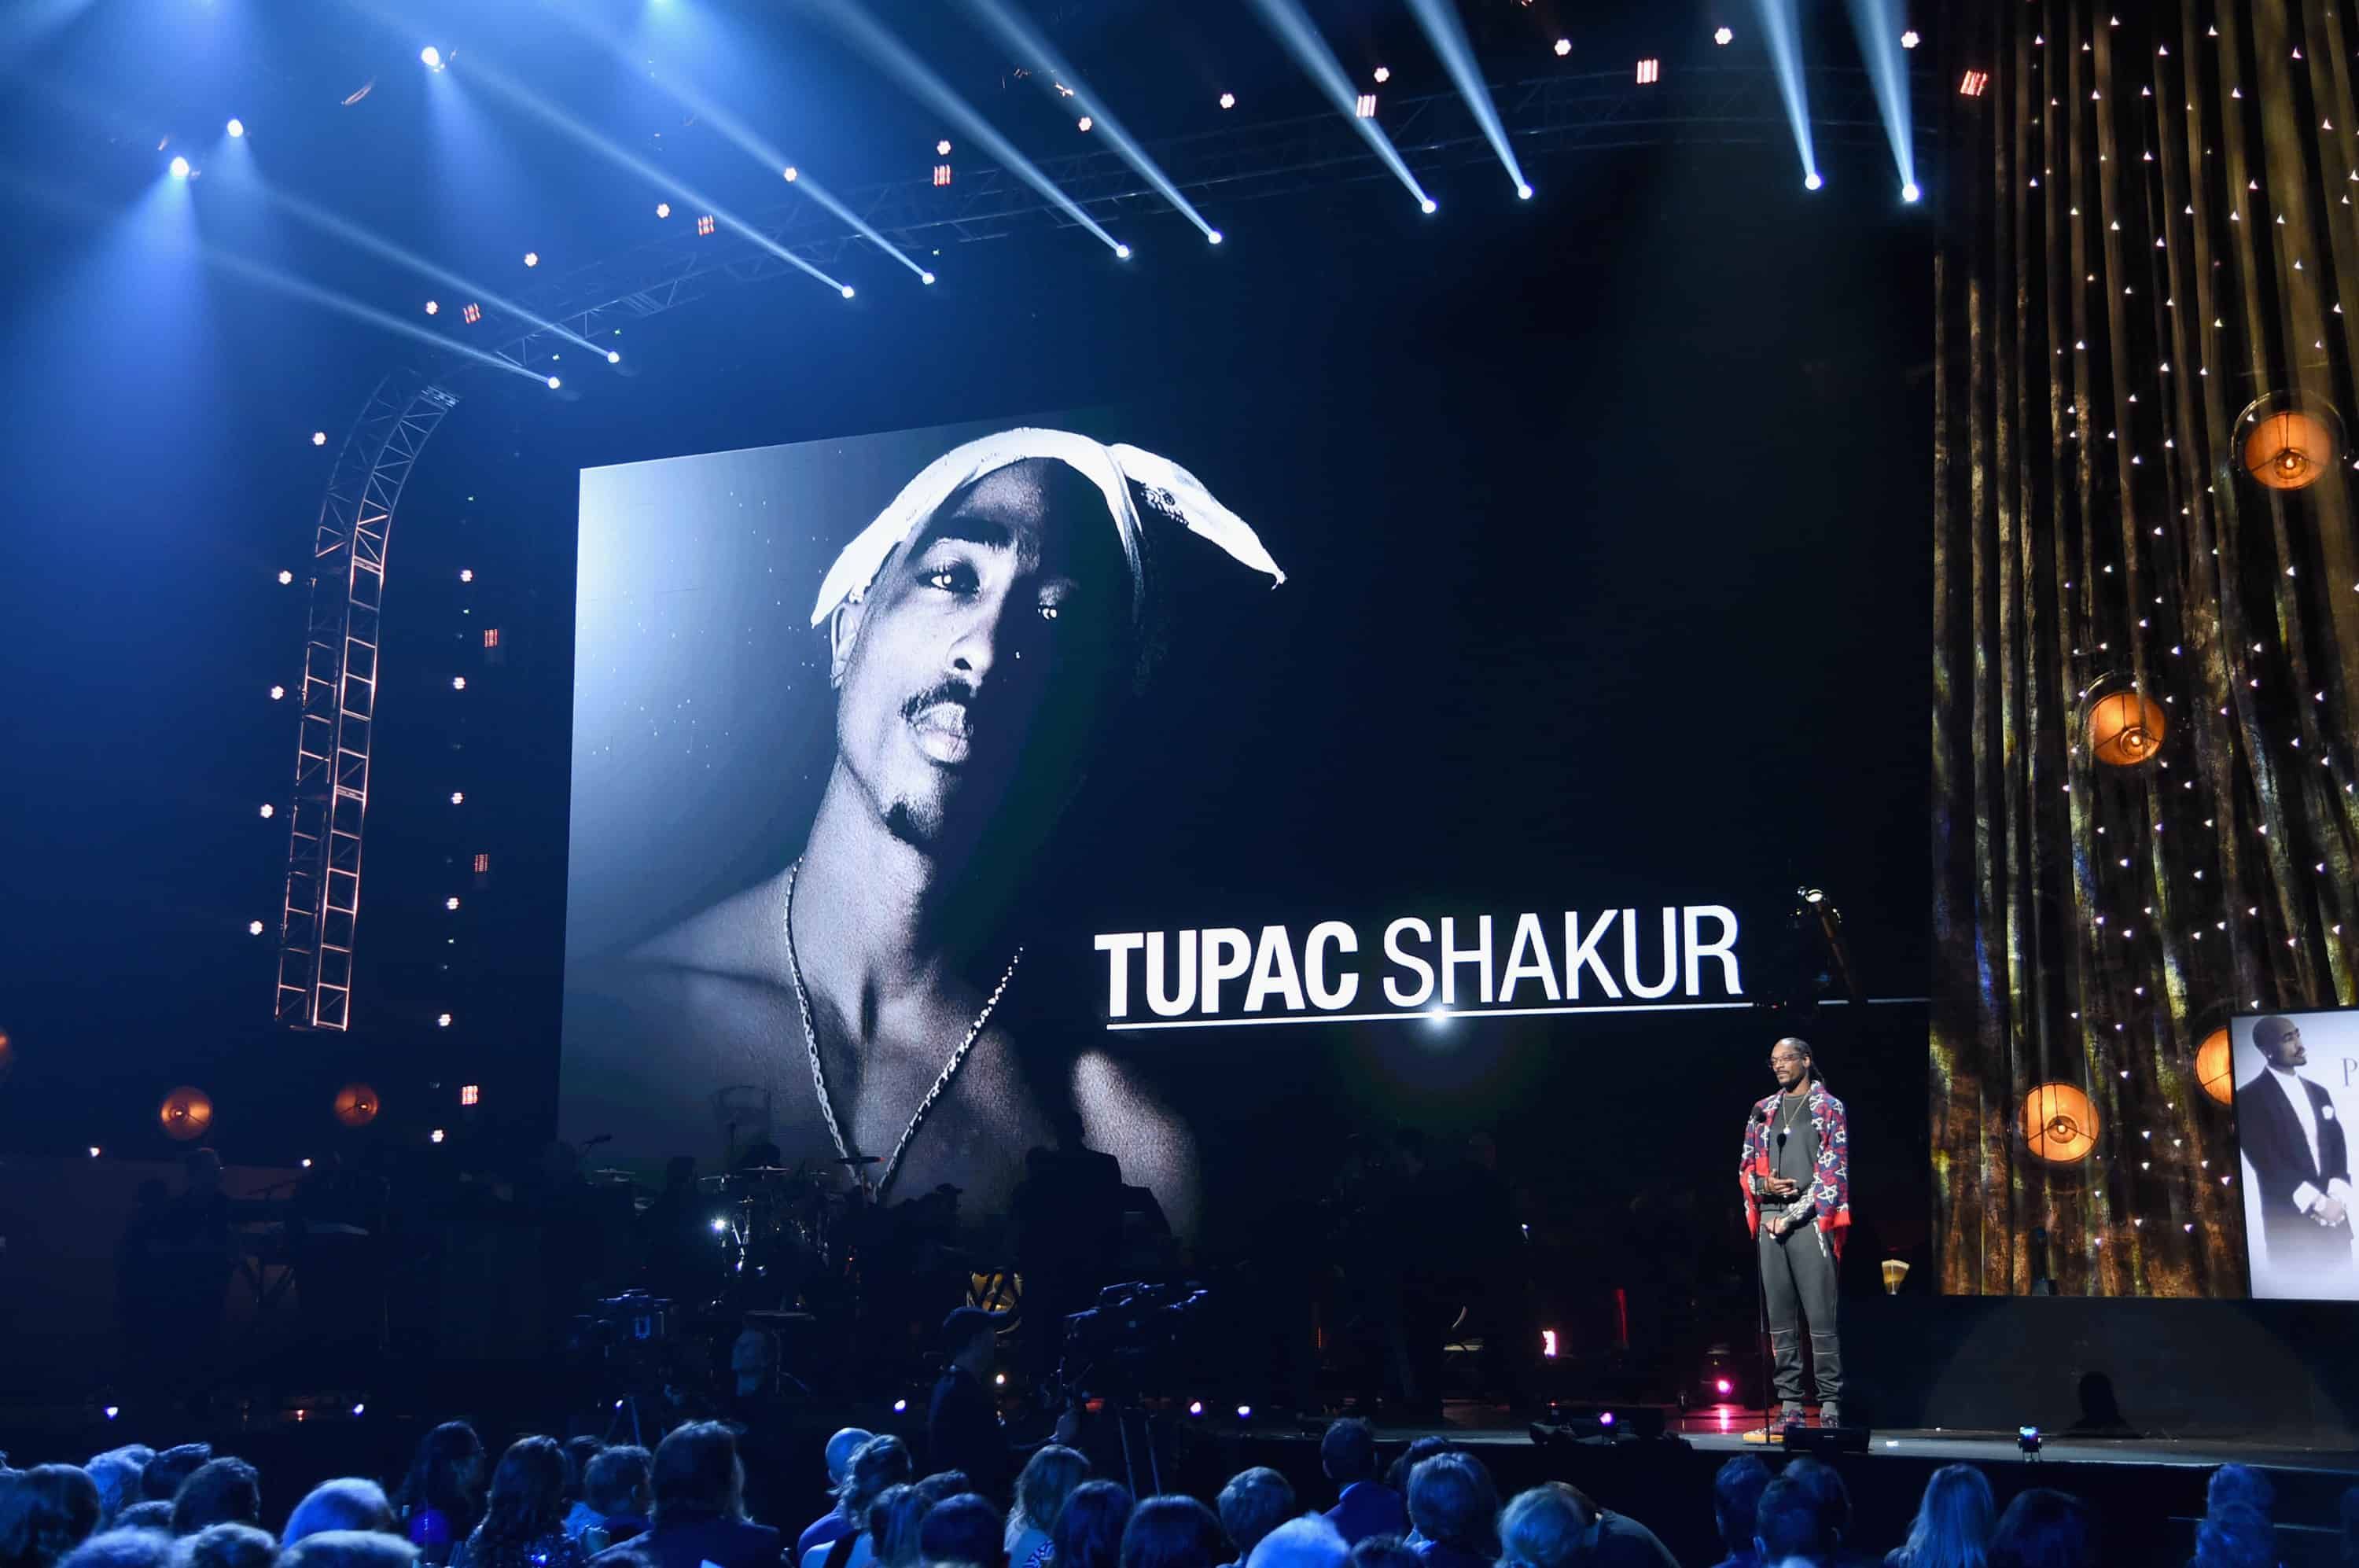 Oakland Street Named In Tupac's Honor: 'Tupac Shakur Way'